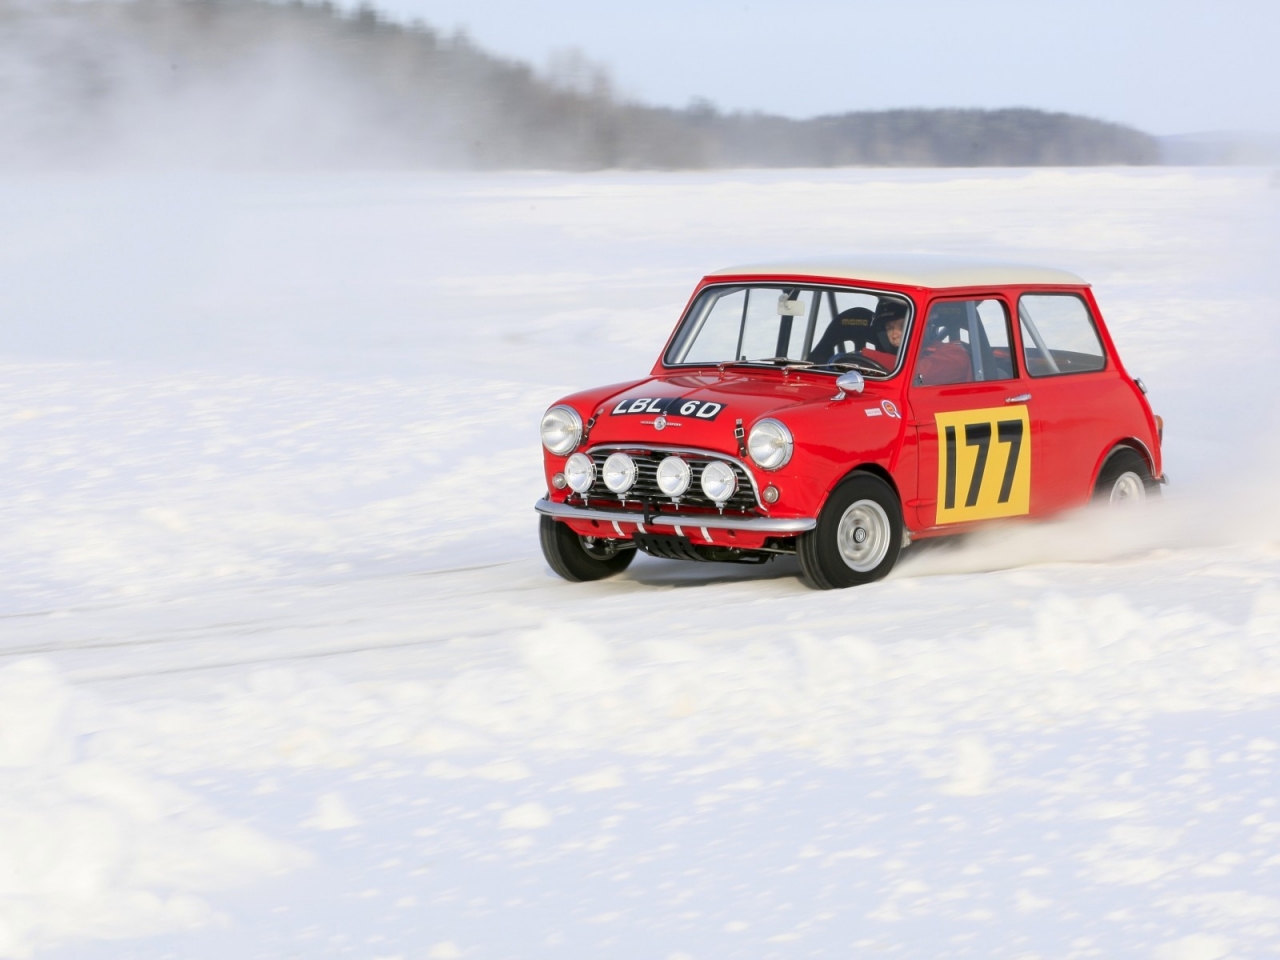 Mini Snow Race for 1280 x 960 resolution